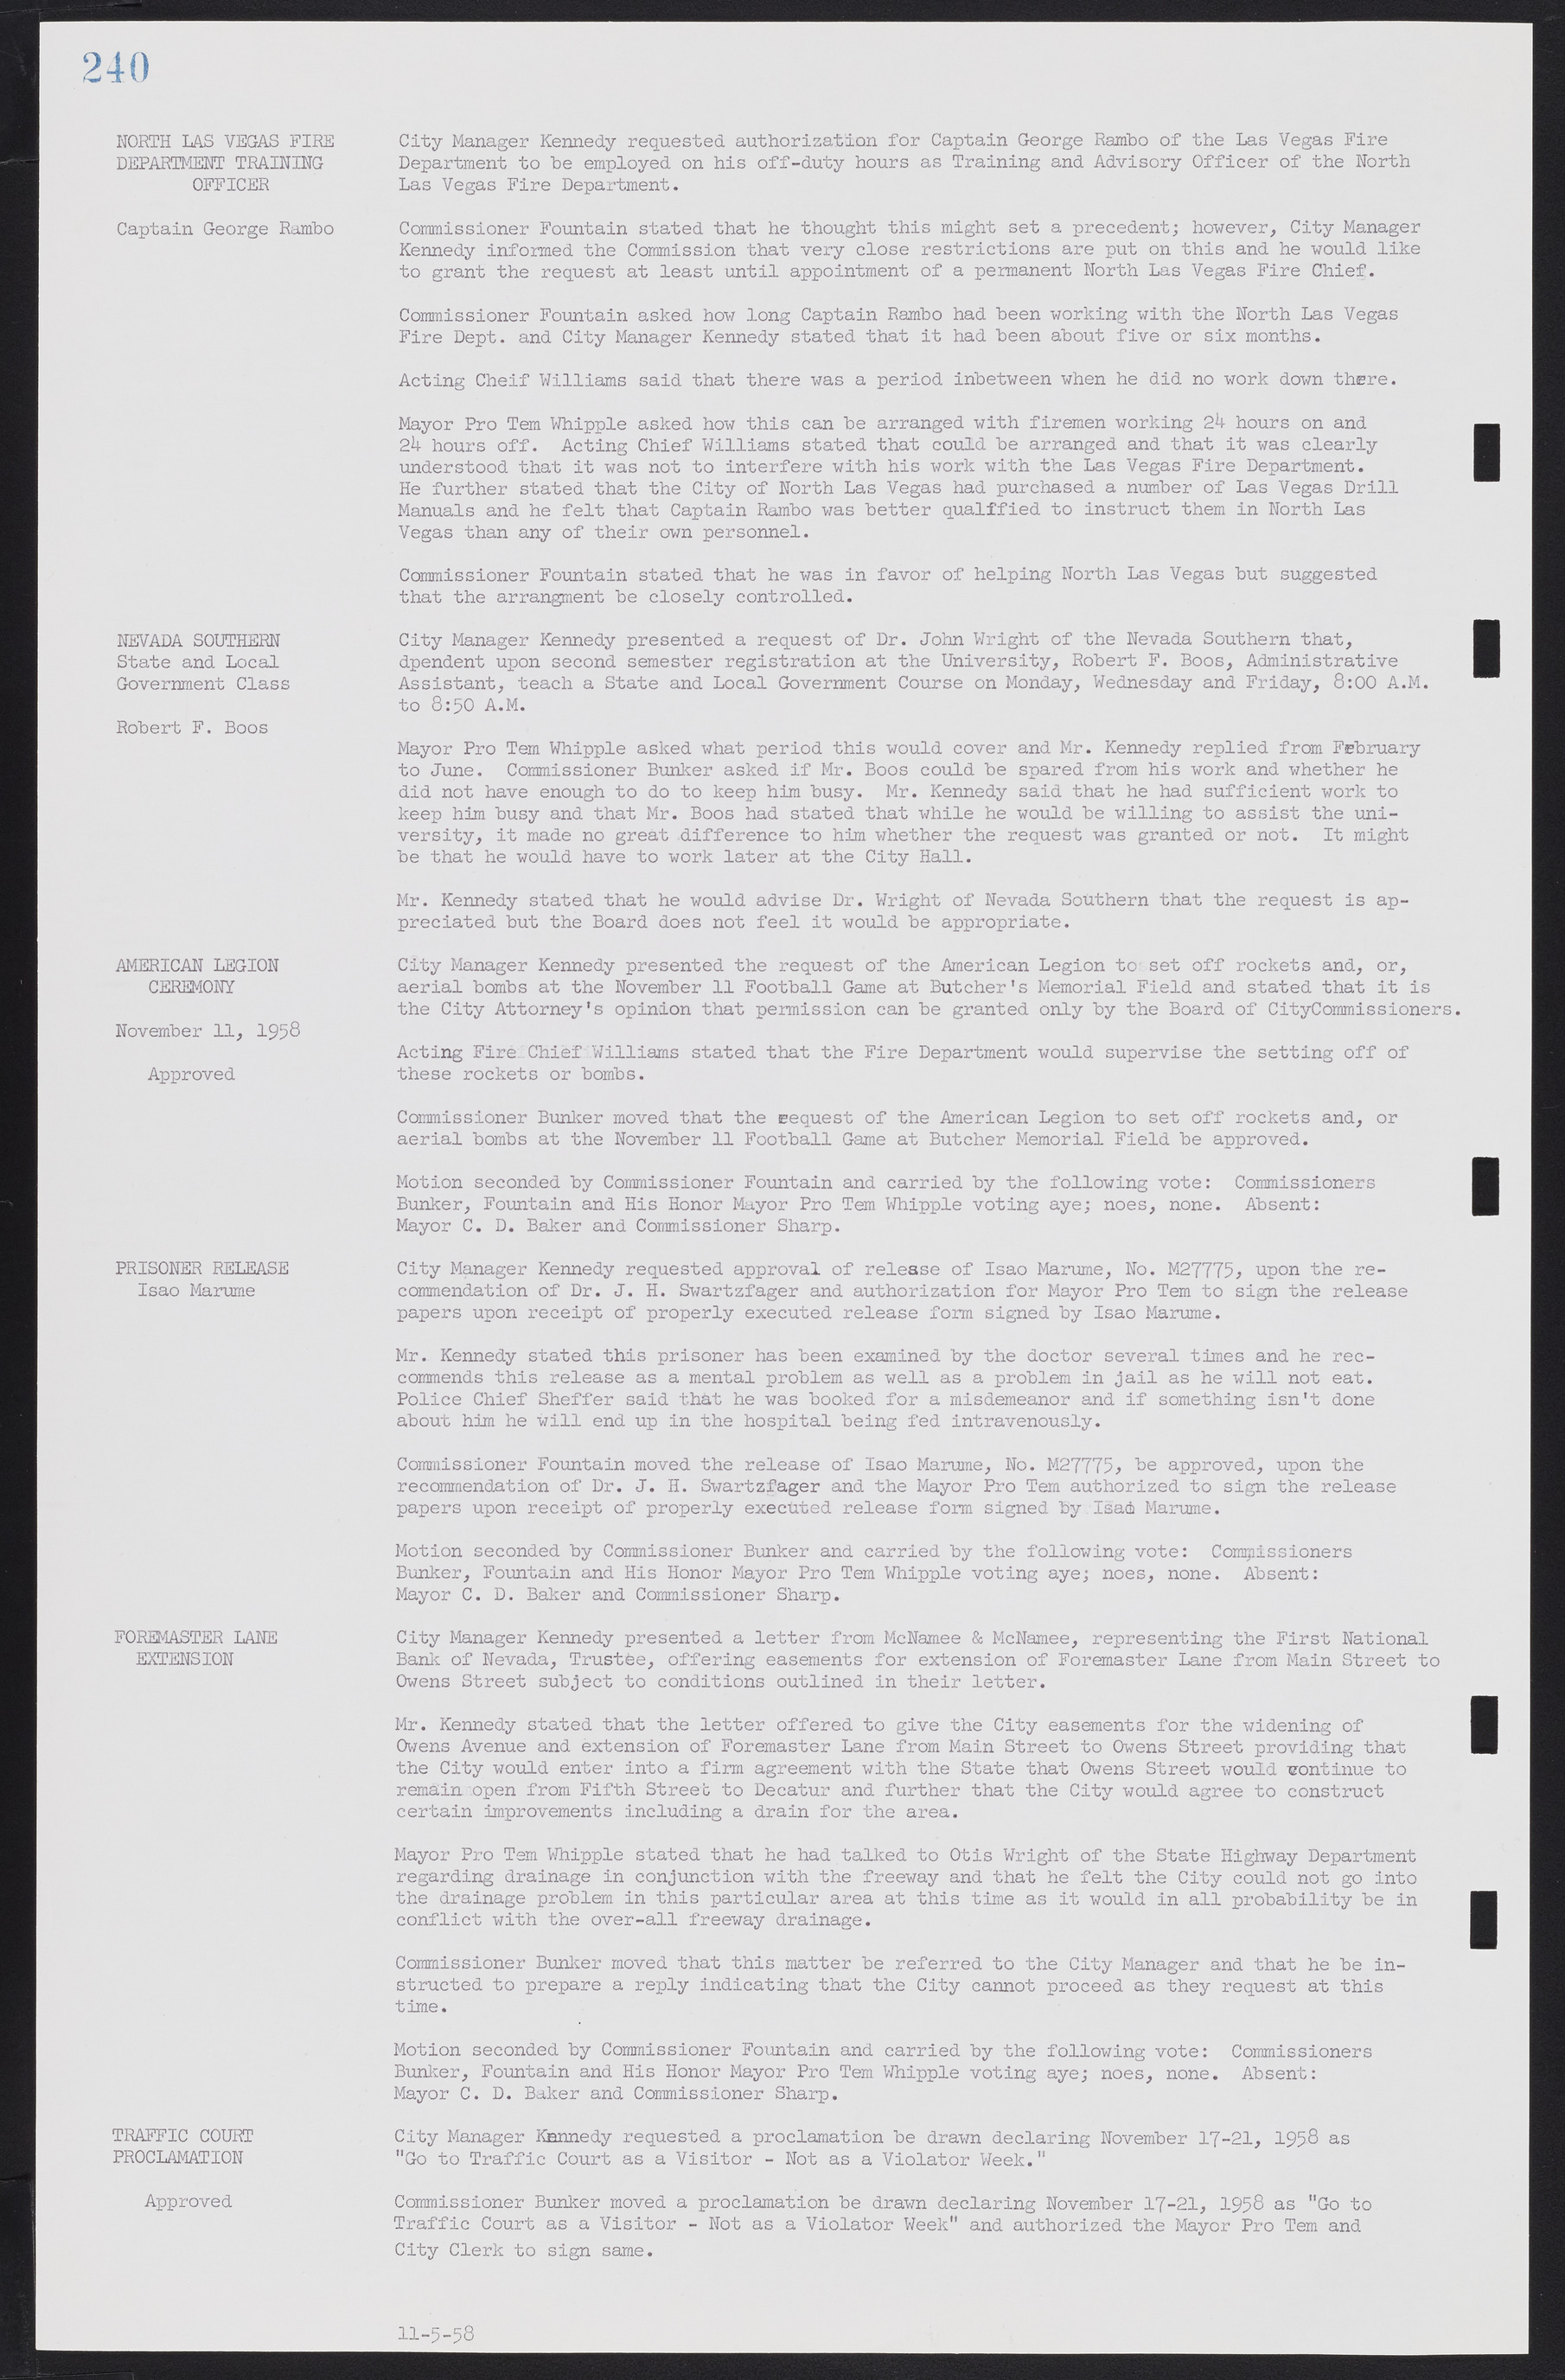 Las Vegas City Commission Minutes, November 20, 1957 to December 2, 1959, lvc000011-248